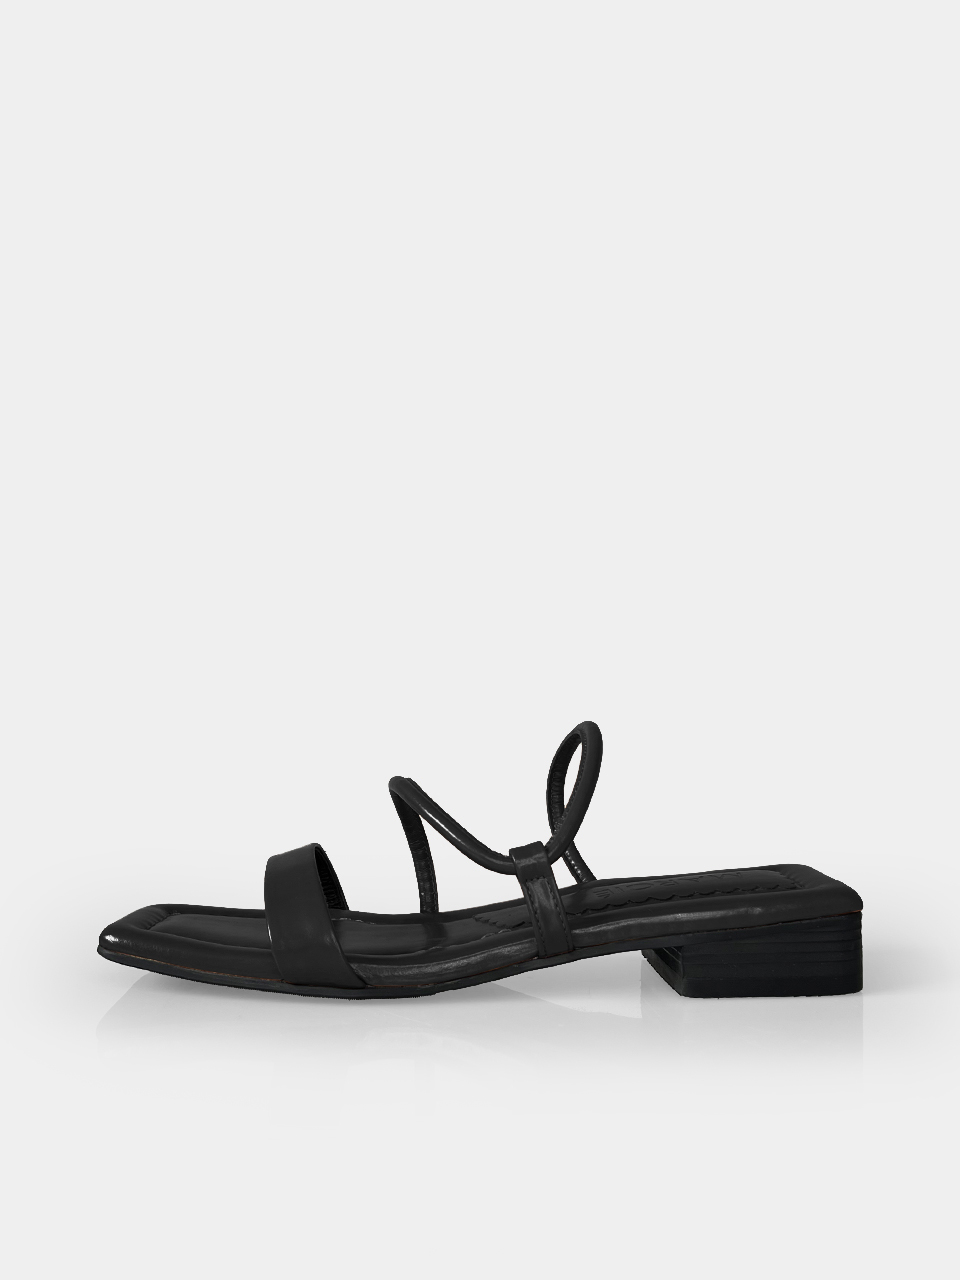 [Out of stock] Mrc067 Curve Flat Sandal (Black)